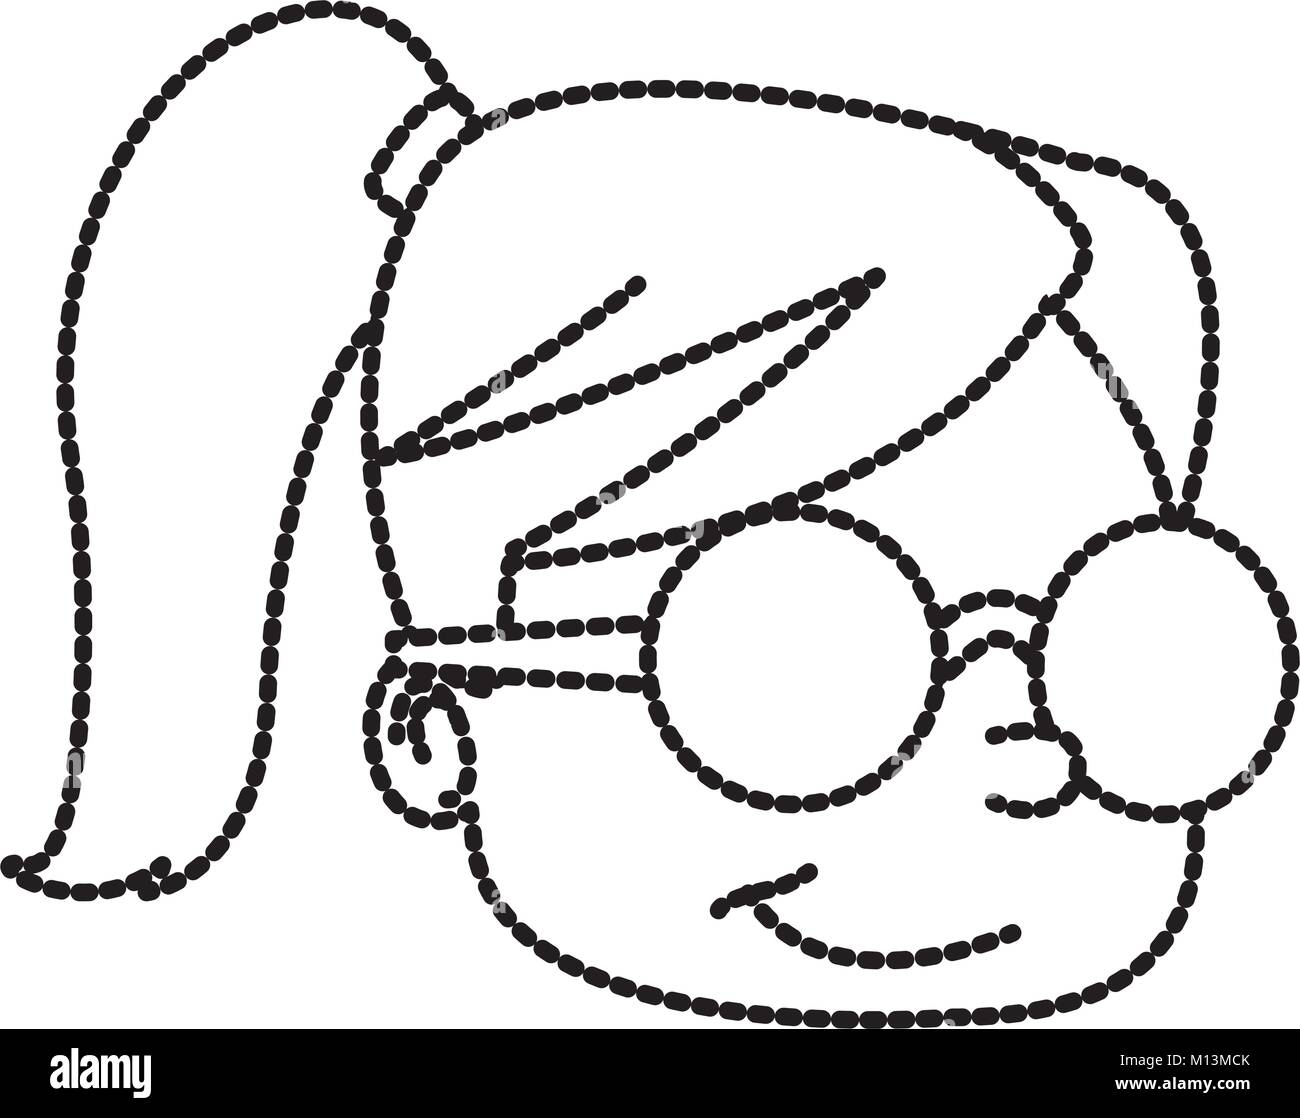 School girl with glasses cartoon Stock Vector